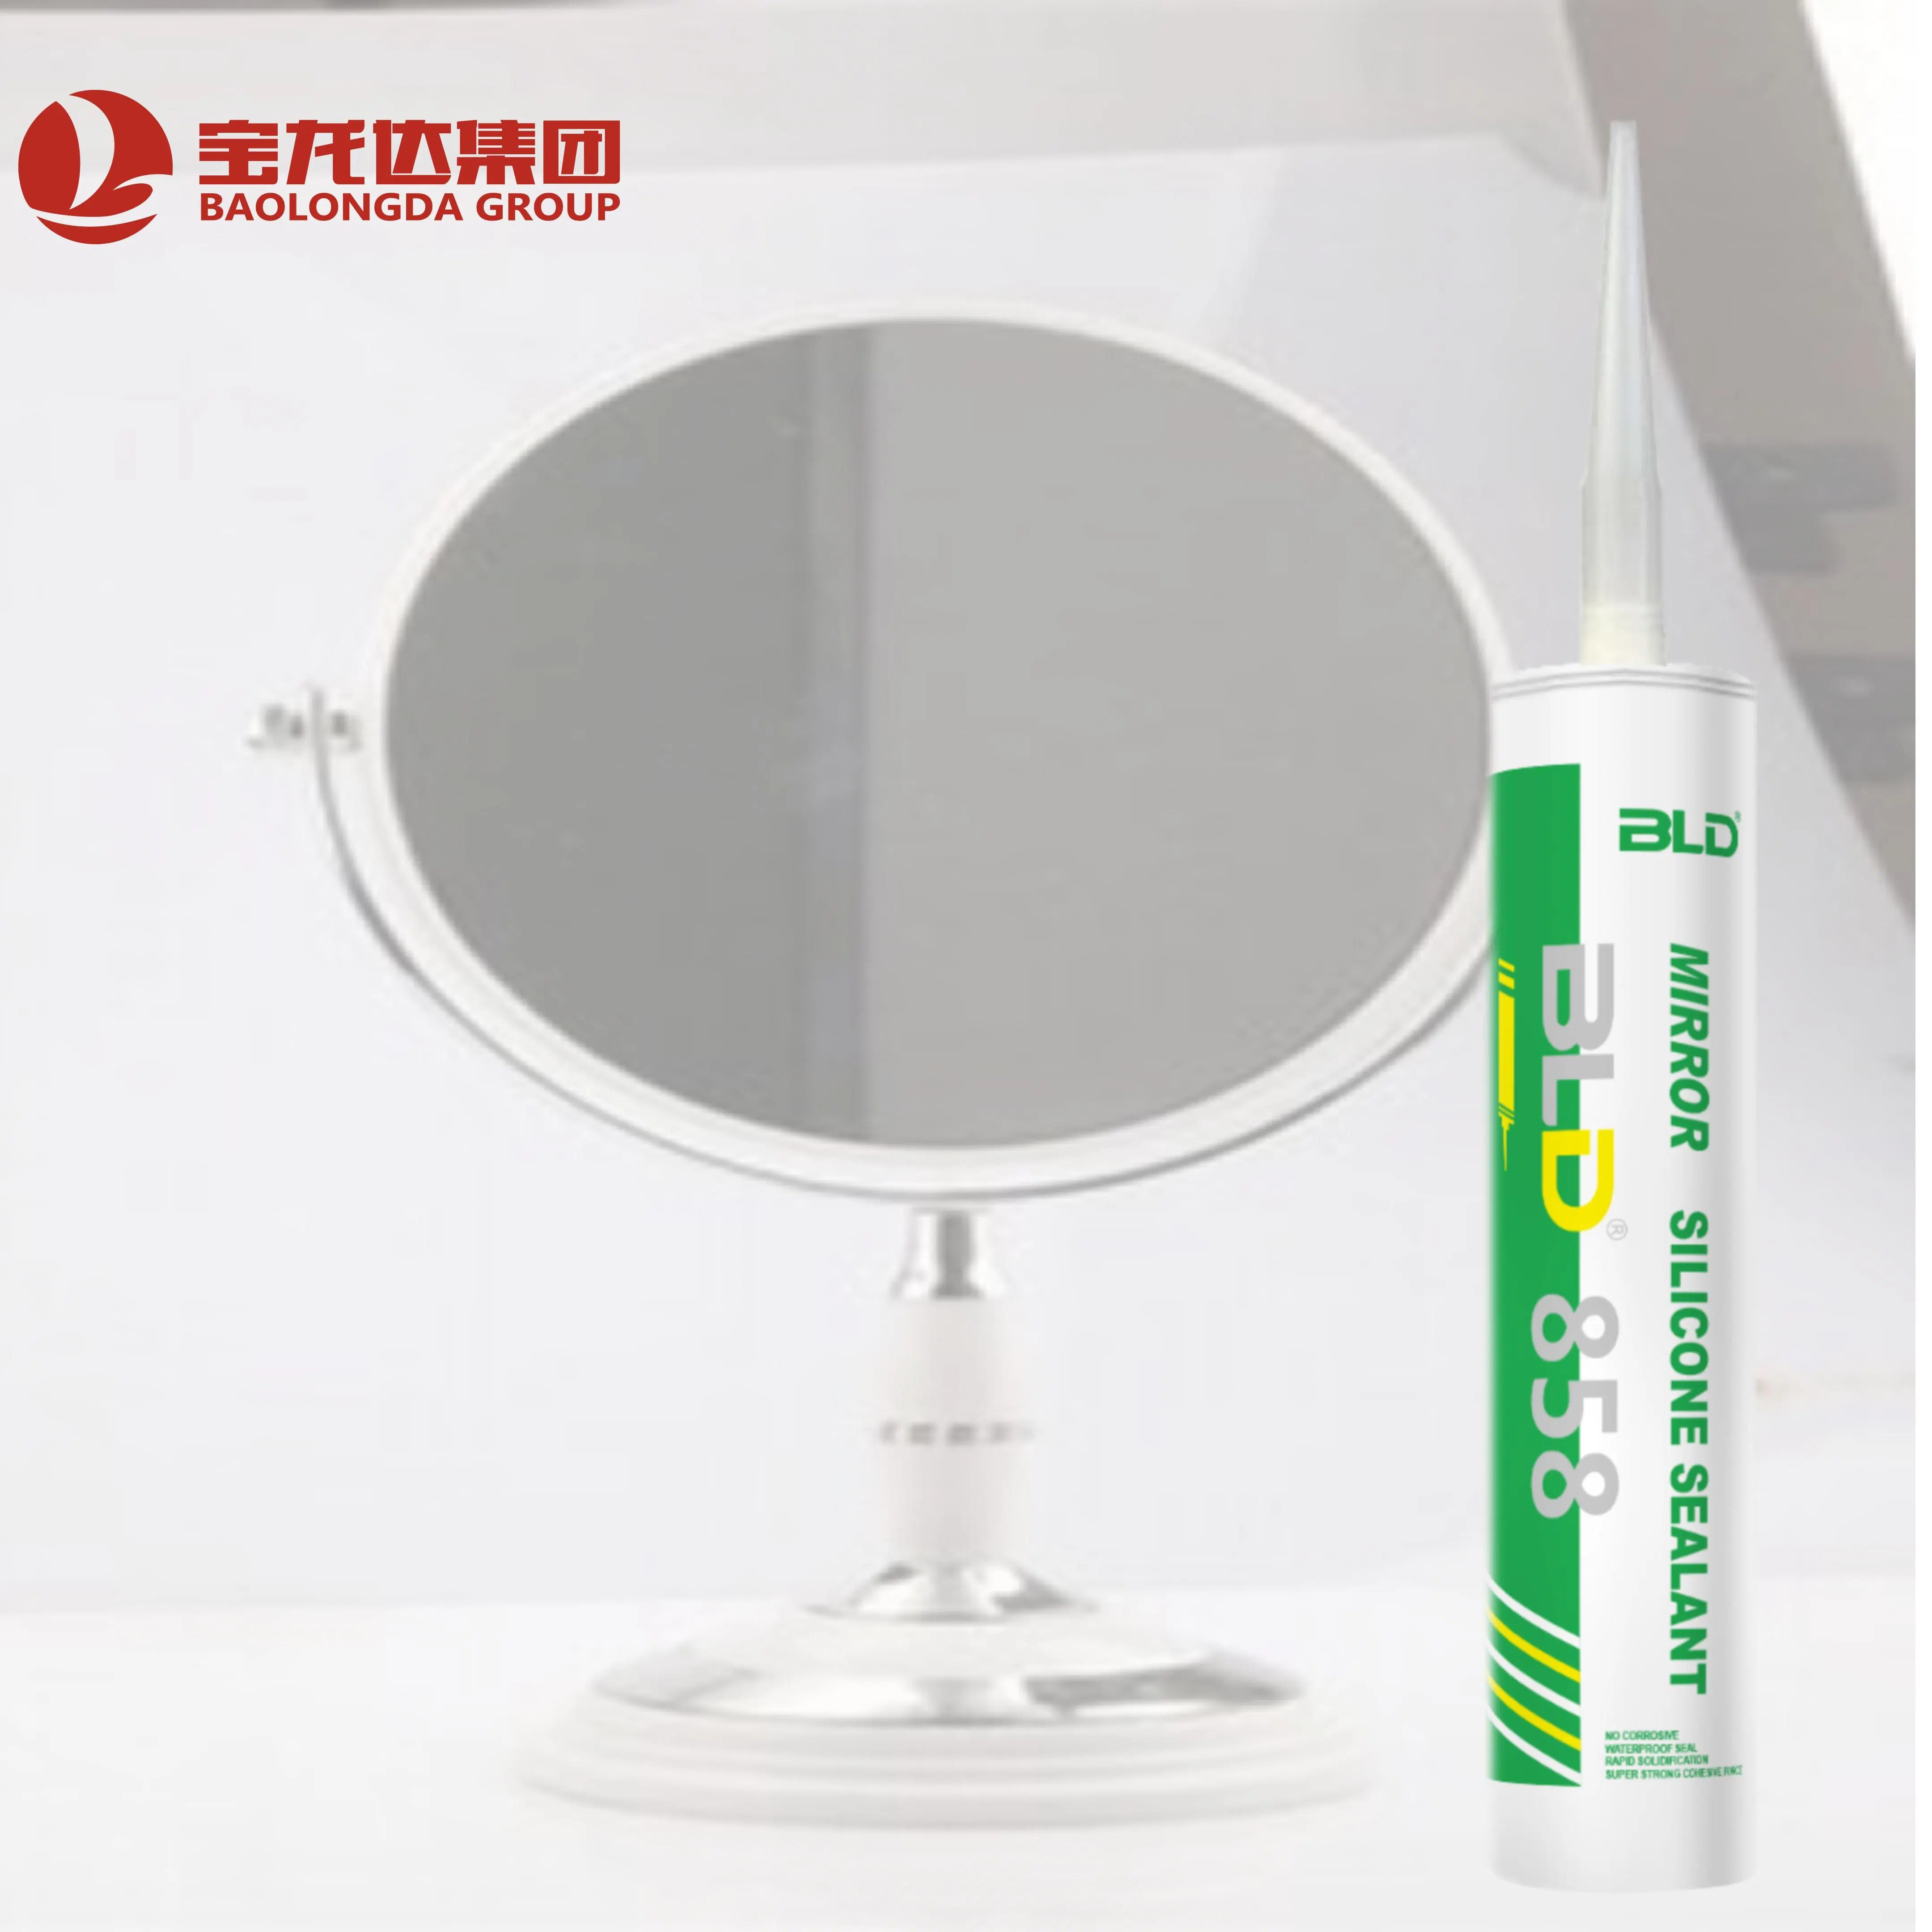 Bld-858 Mirror Silicone Sealant 300ml for Glass Bathroom